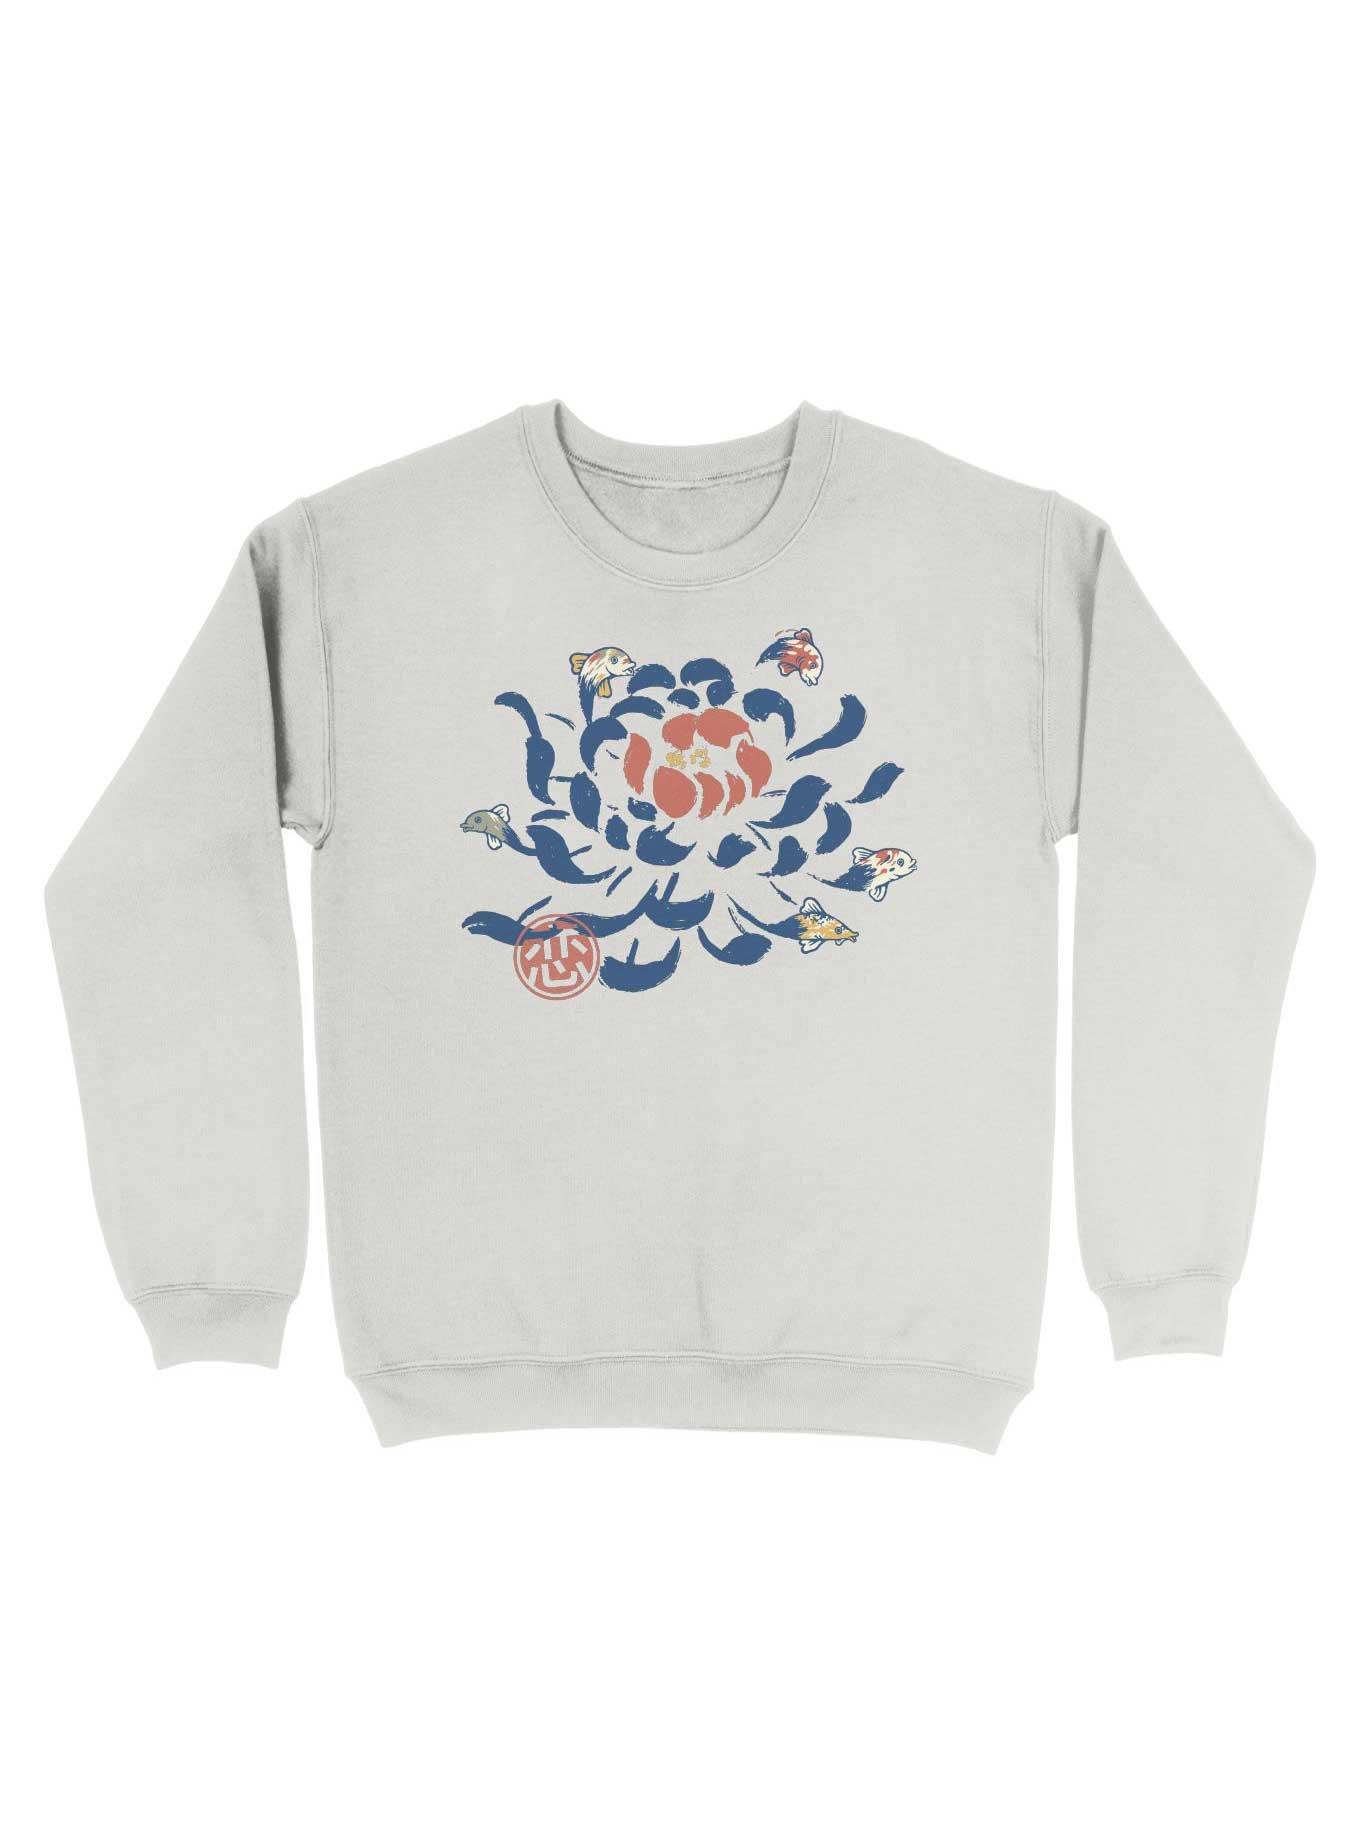 Hot Topic Vintage Japanese Flower Koi Sweatshirt